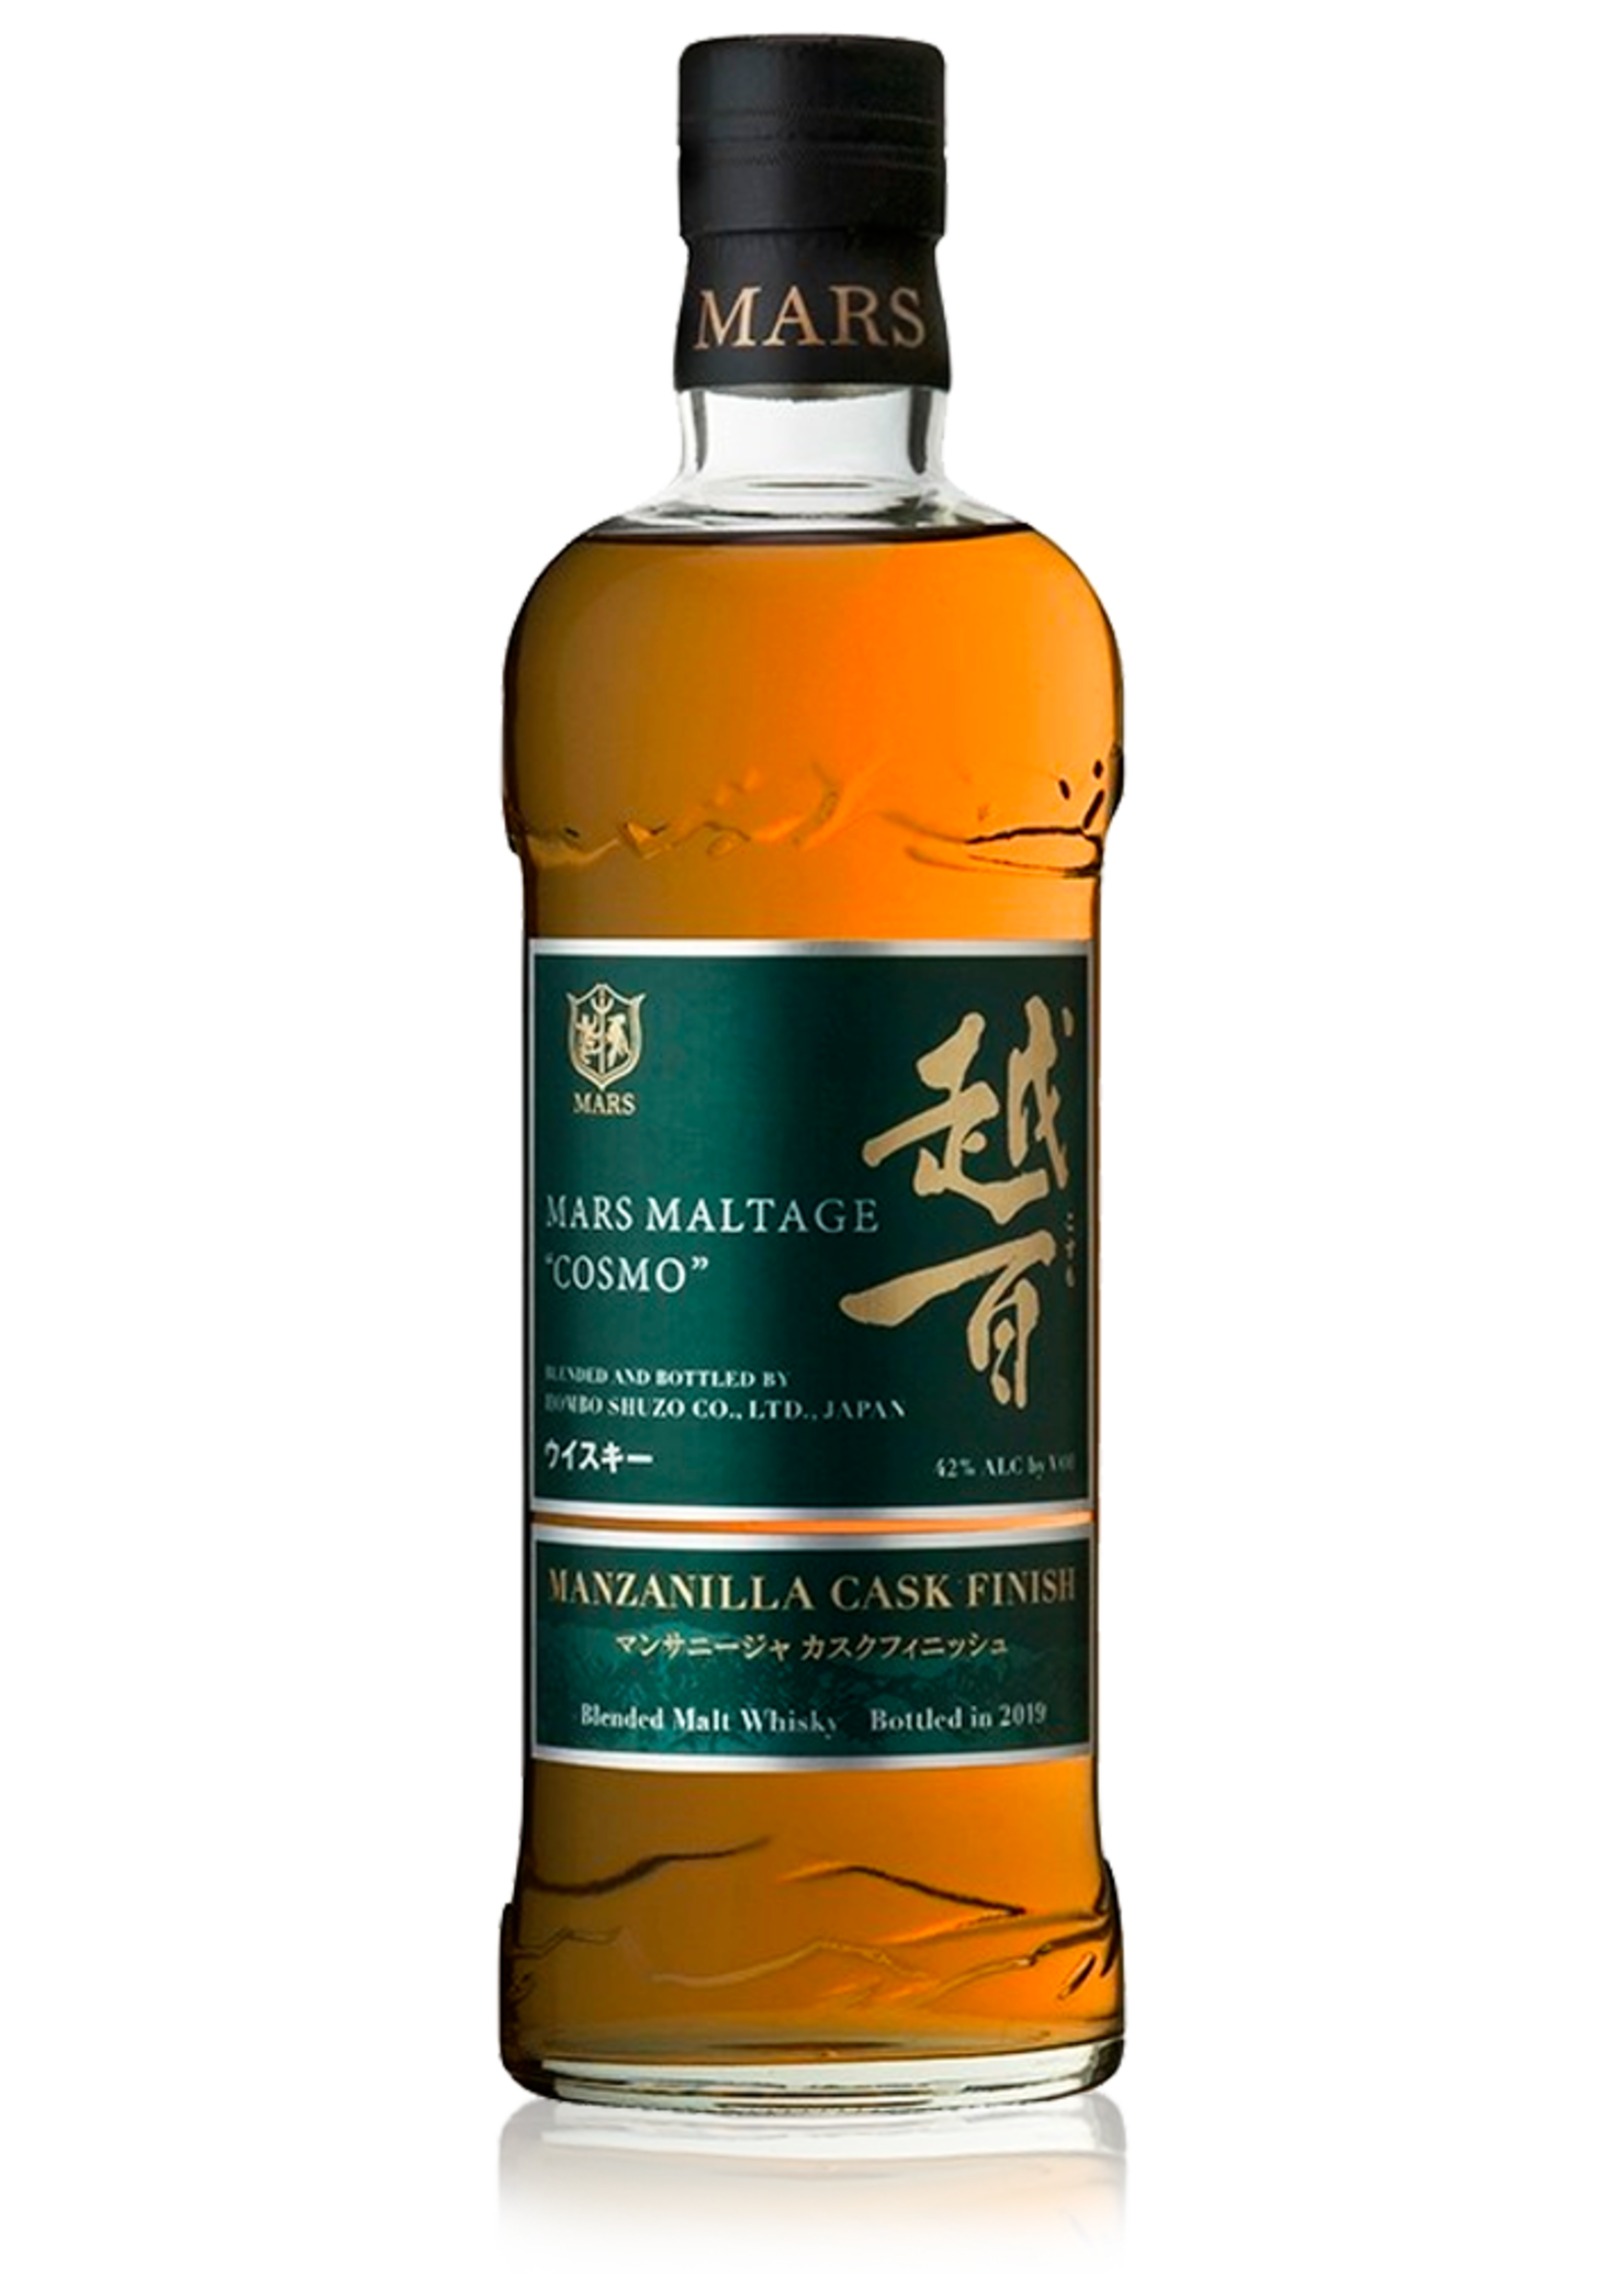 Mars Mars / Maltage “Cosmo” Manzanilla Sherry Cask Finish Japanese Whisky 42% abv / 700mL